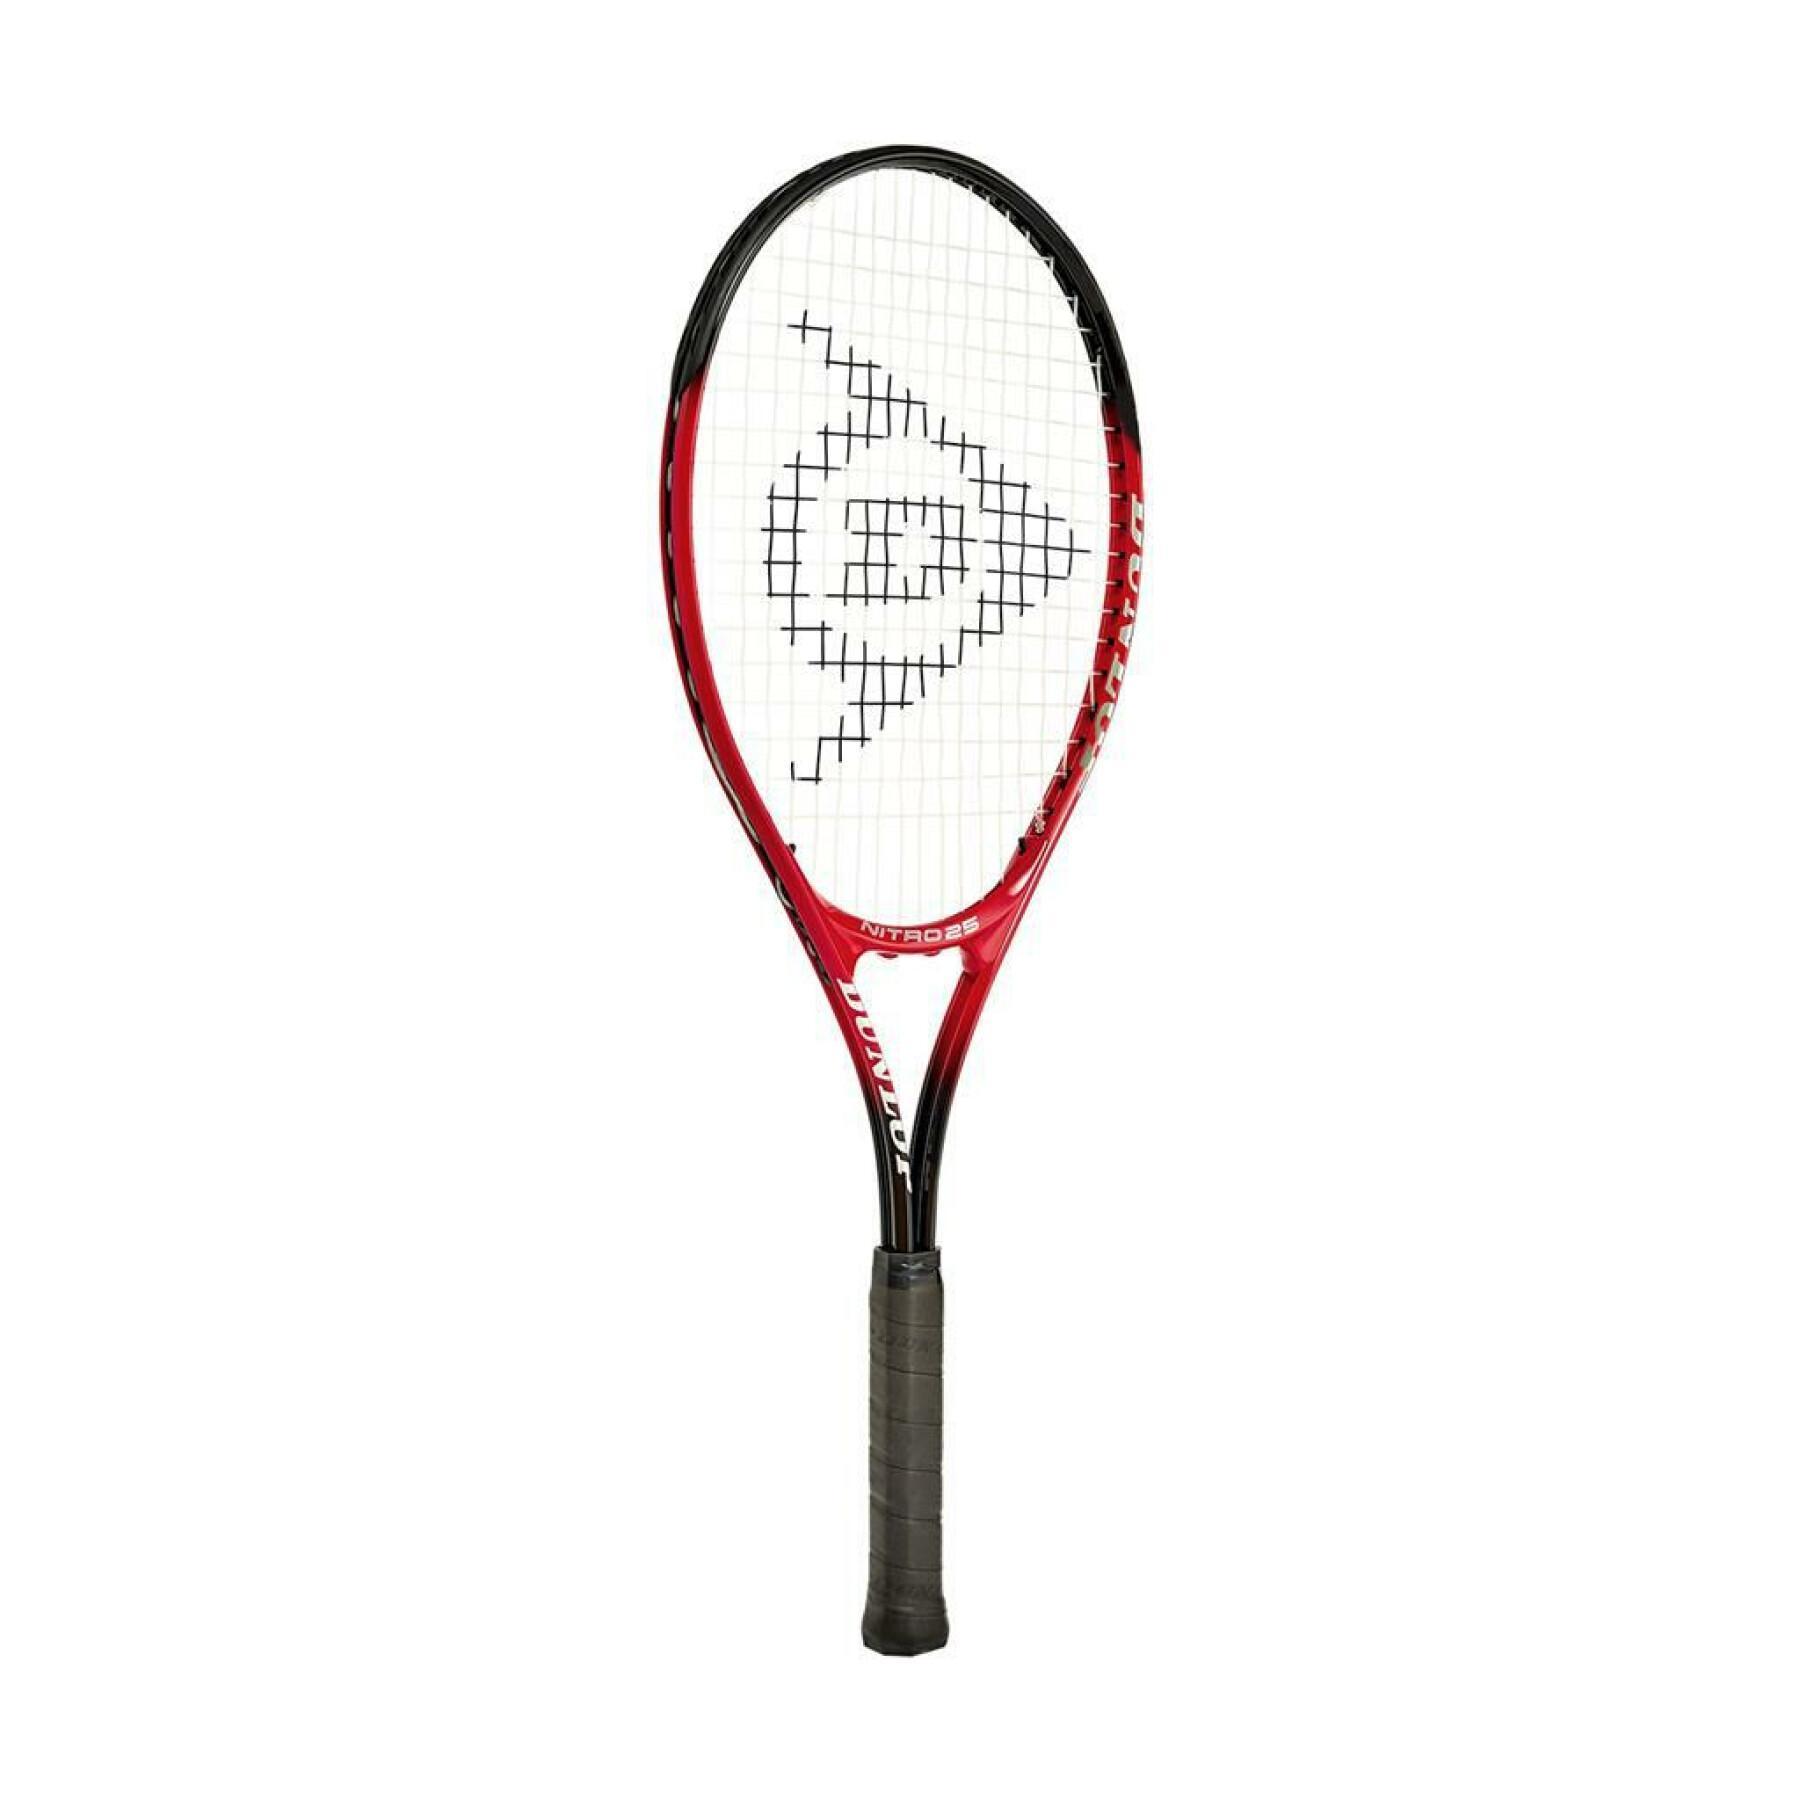 Barnens racket Dunlop nitro 25 g0